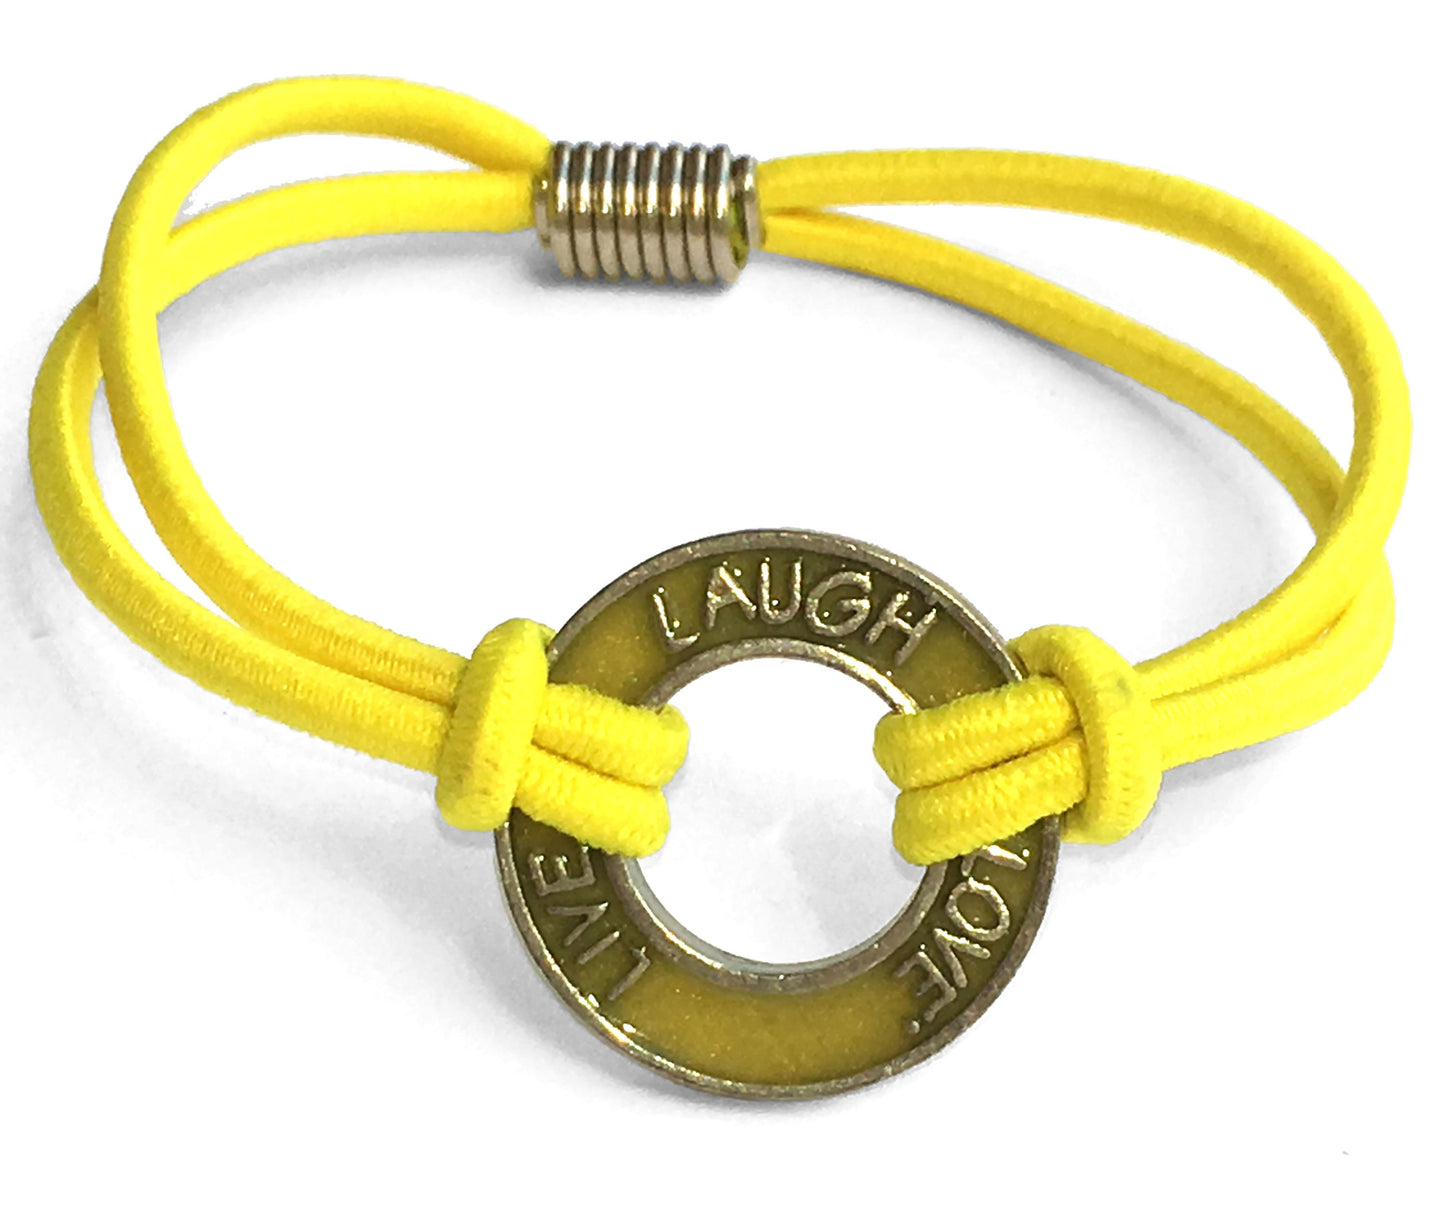 Live Laugh Love® Loop Bungee Bracelet - Yellow